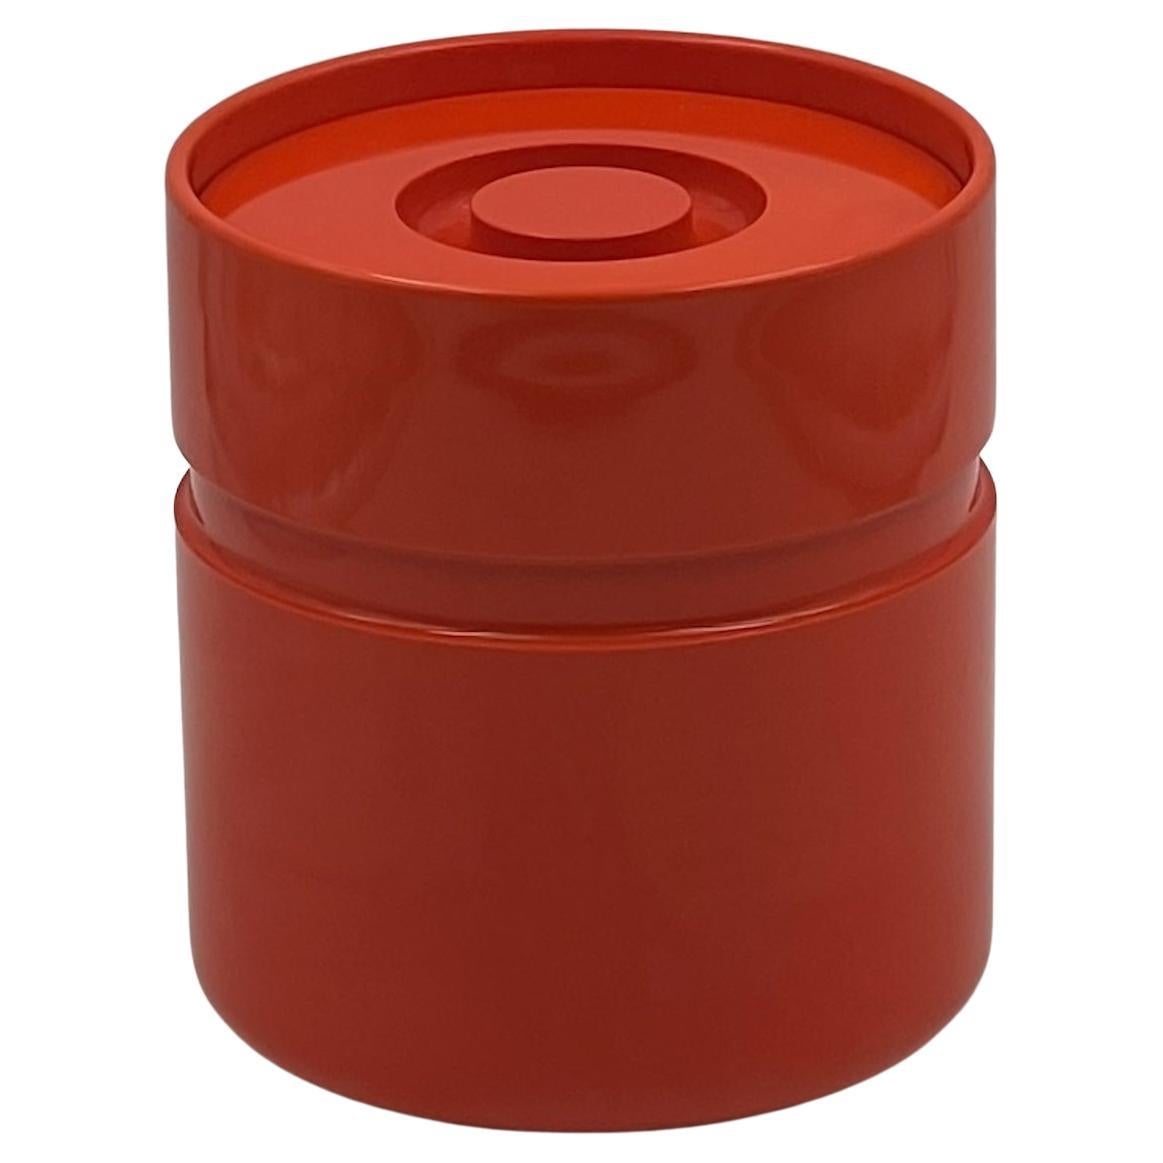 70s Orange Ice Bucket Sergio Asti for Heller - Iconic Italian Design Tableware